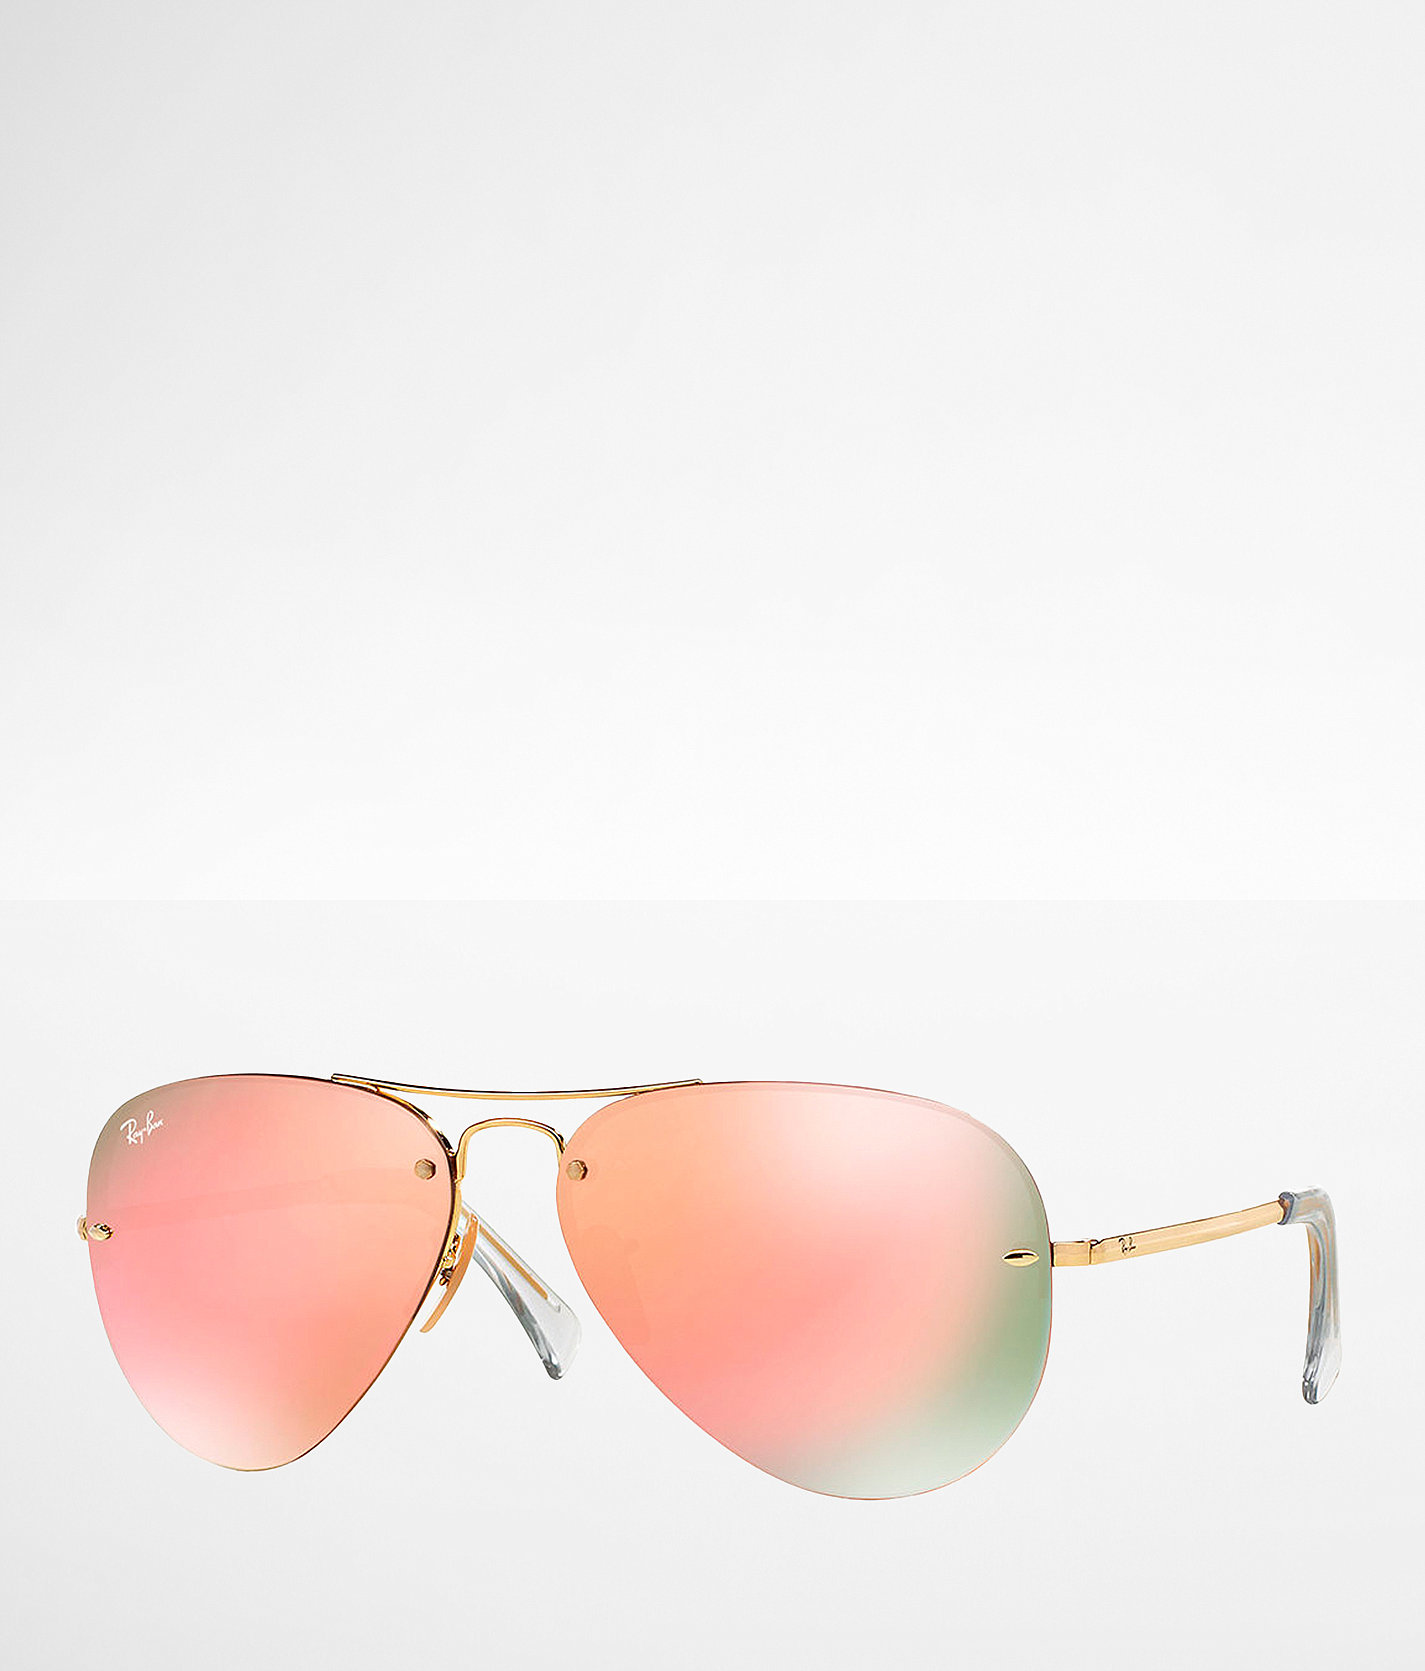 ray ban rimless aviator sunglasses